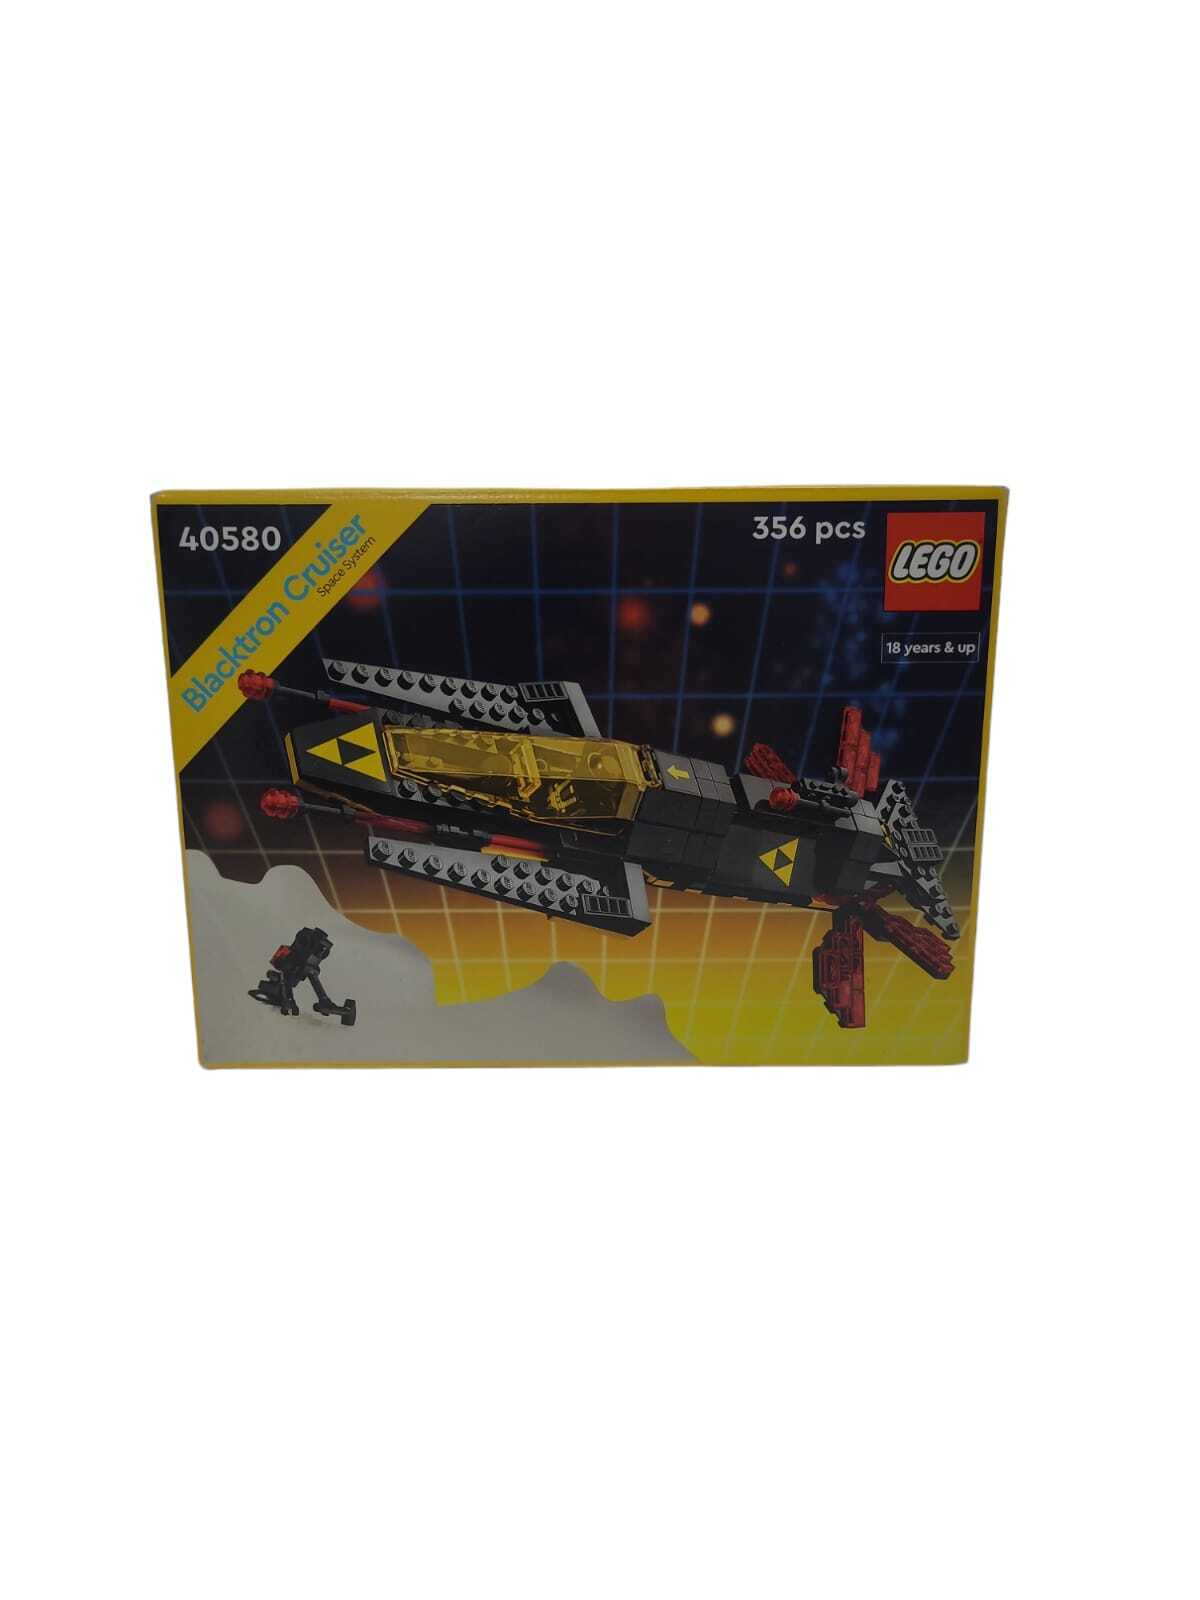 LEGO 40580 - Blacktron-Raumschiff